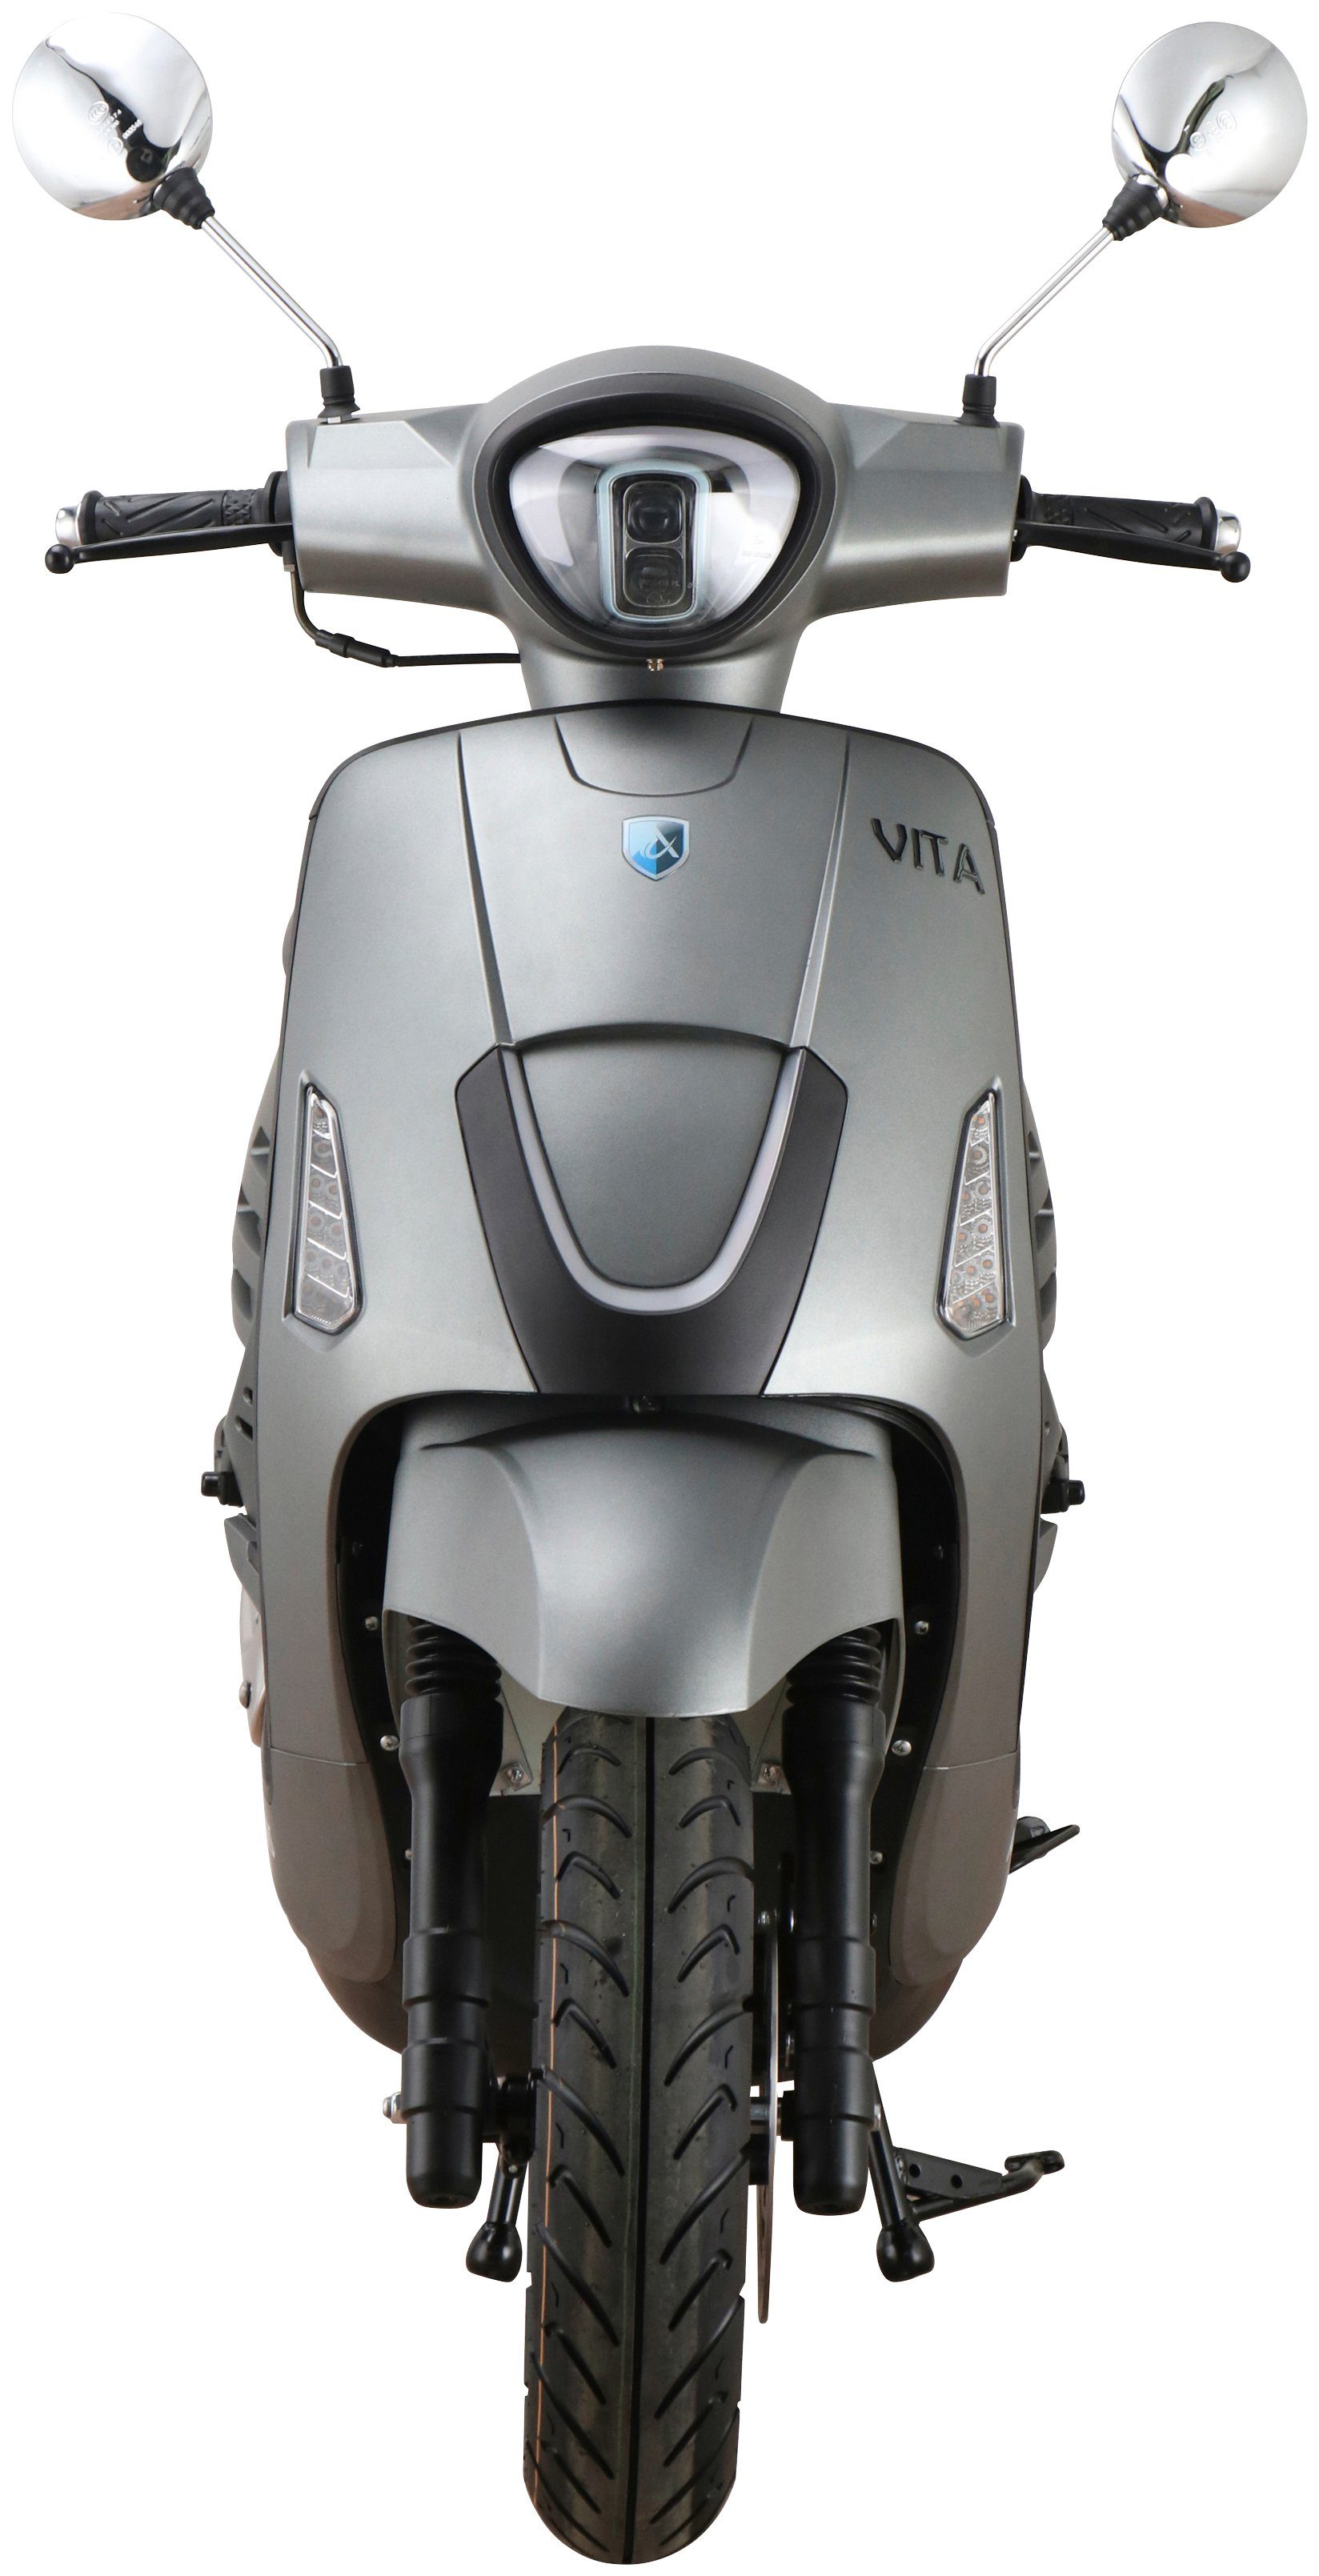 Motorroller Euro 45 5 Motors 50 Alpha Vita, ccm, km/h,